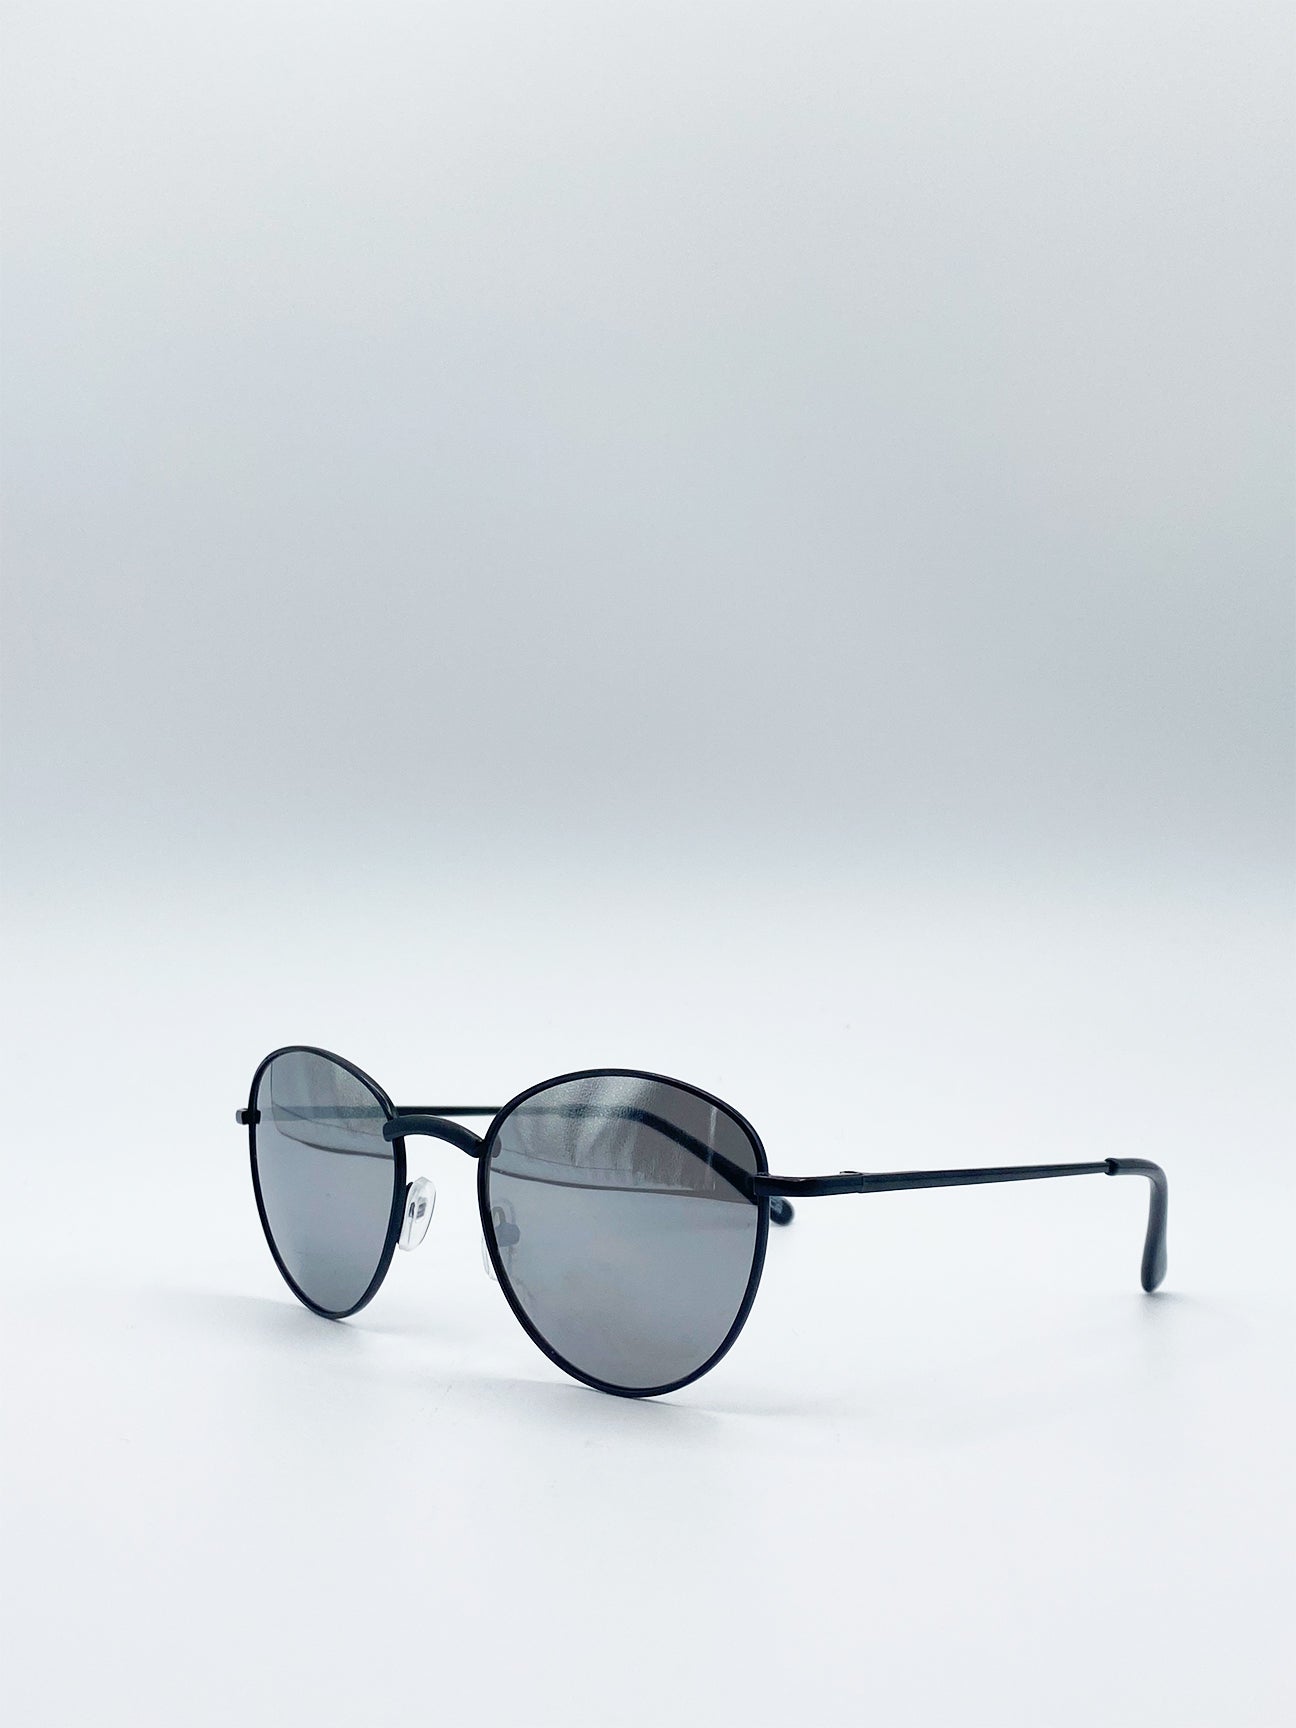 Classic Round Sunglasses In Matte Black With Silver Mirror Lenses